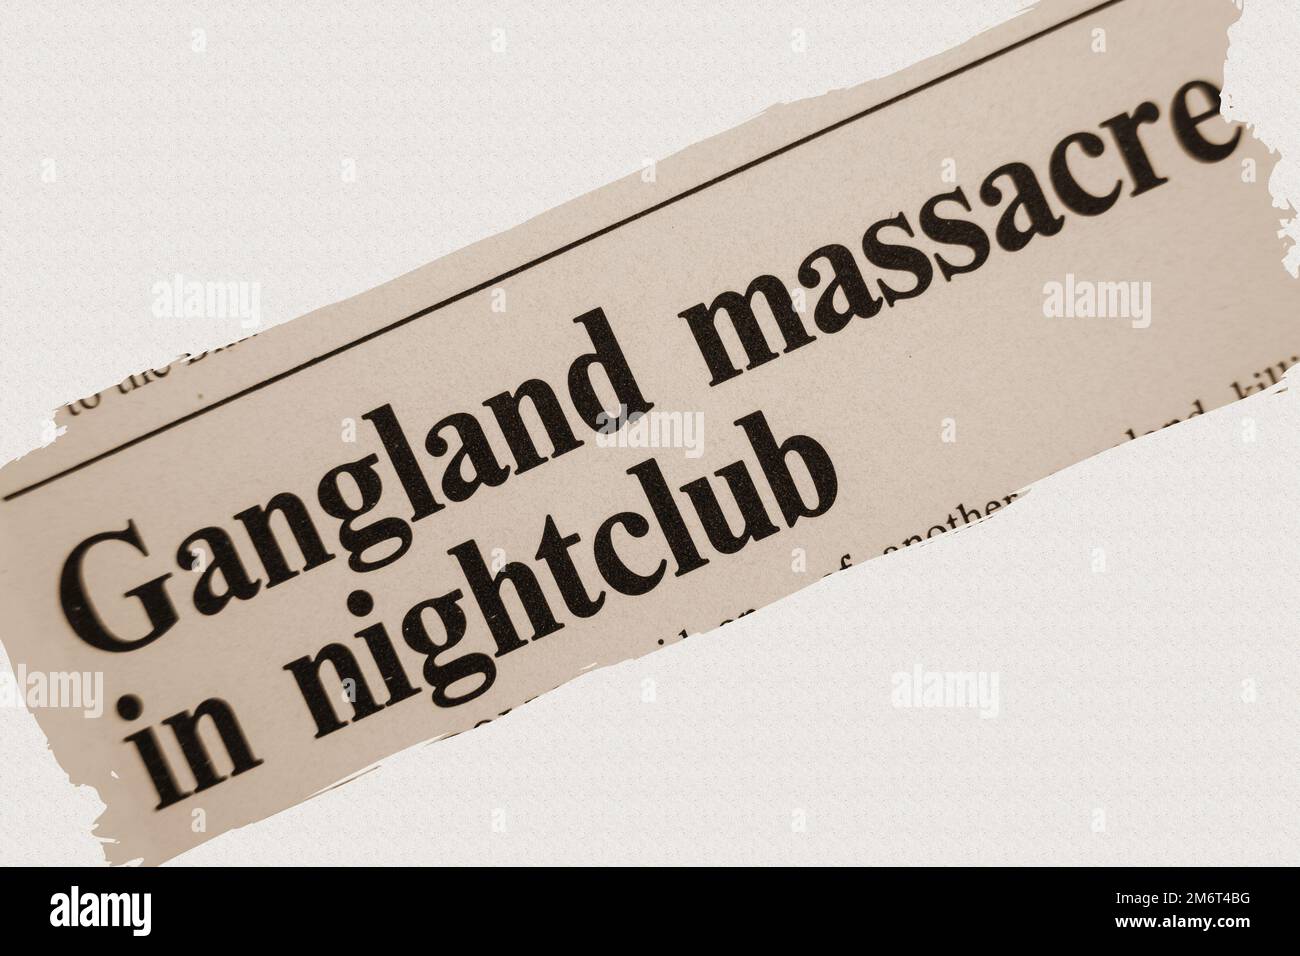 news story from 1975 newspaper headline article title - Gangland massacre in nightclub - overlay sepia Stock Photo